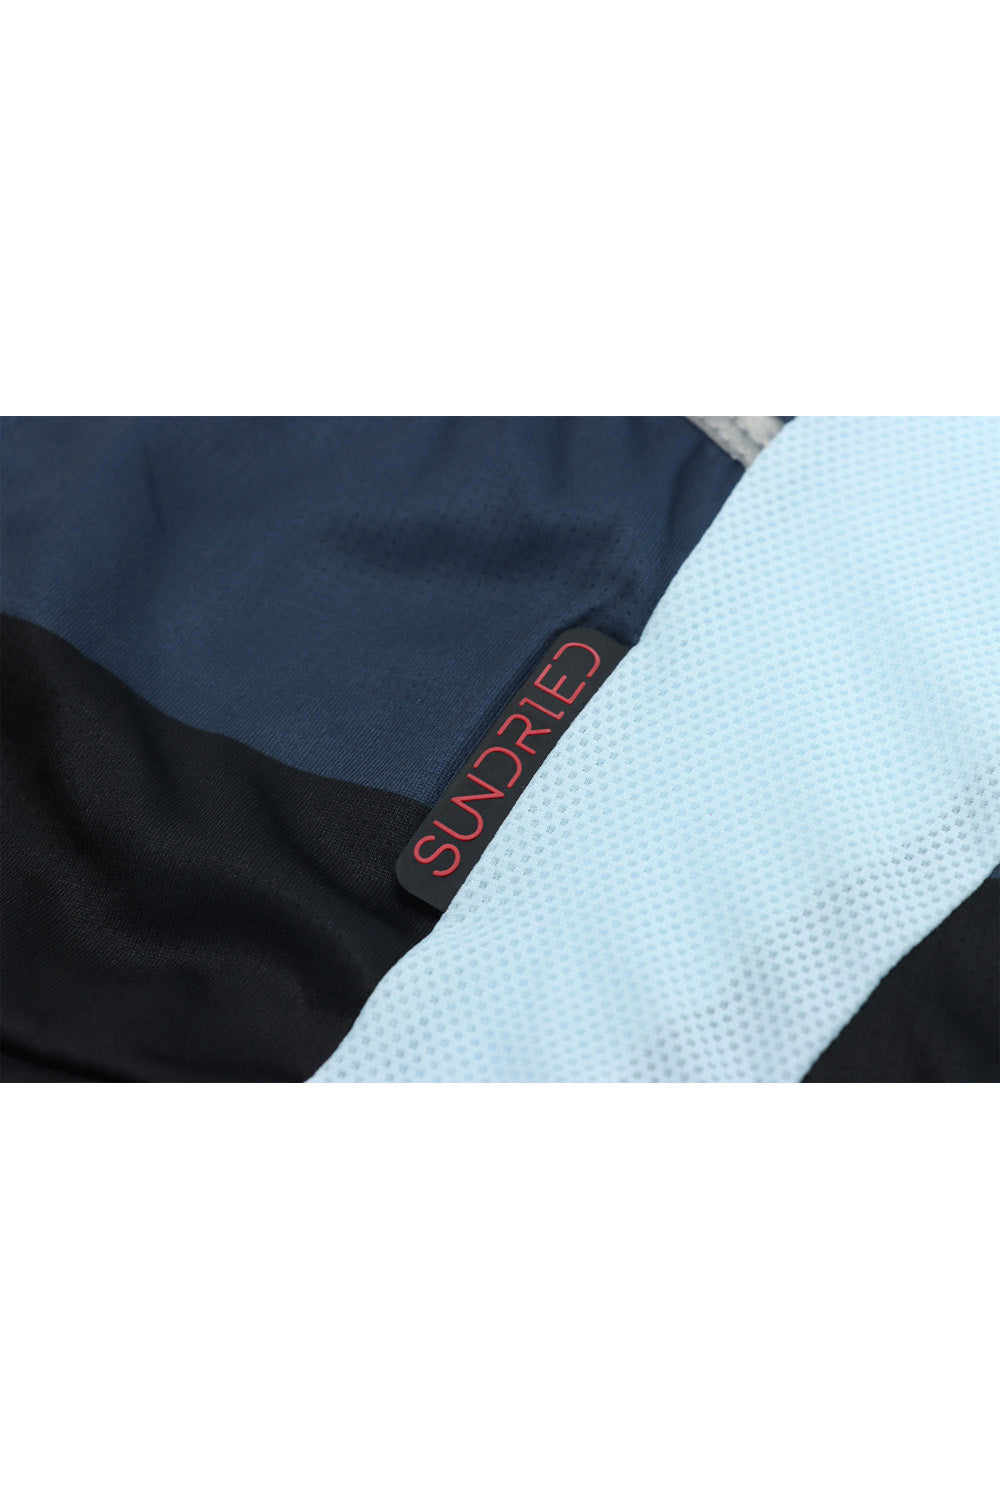 Sundried Ice Men's Short Sleeve Cycle Jersey Short Sleeve Jersey Activewear